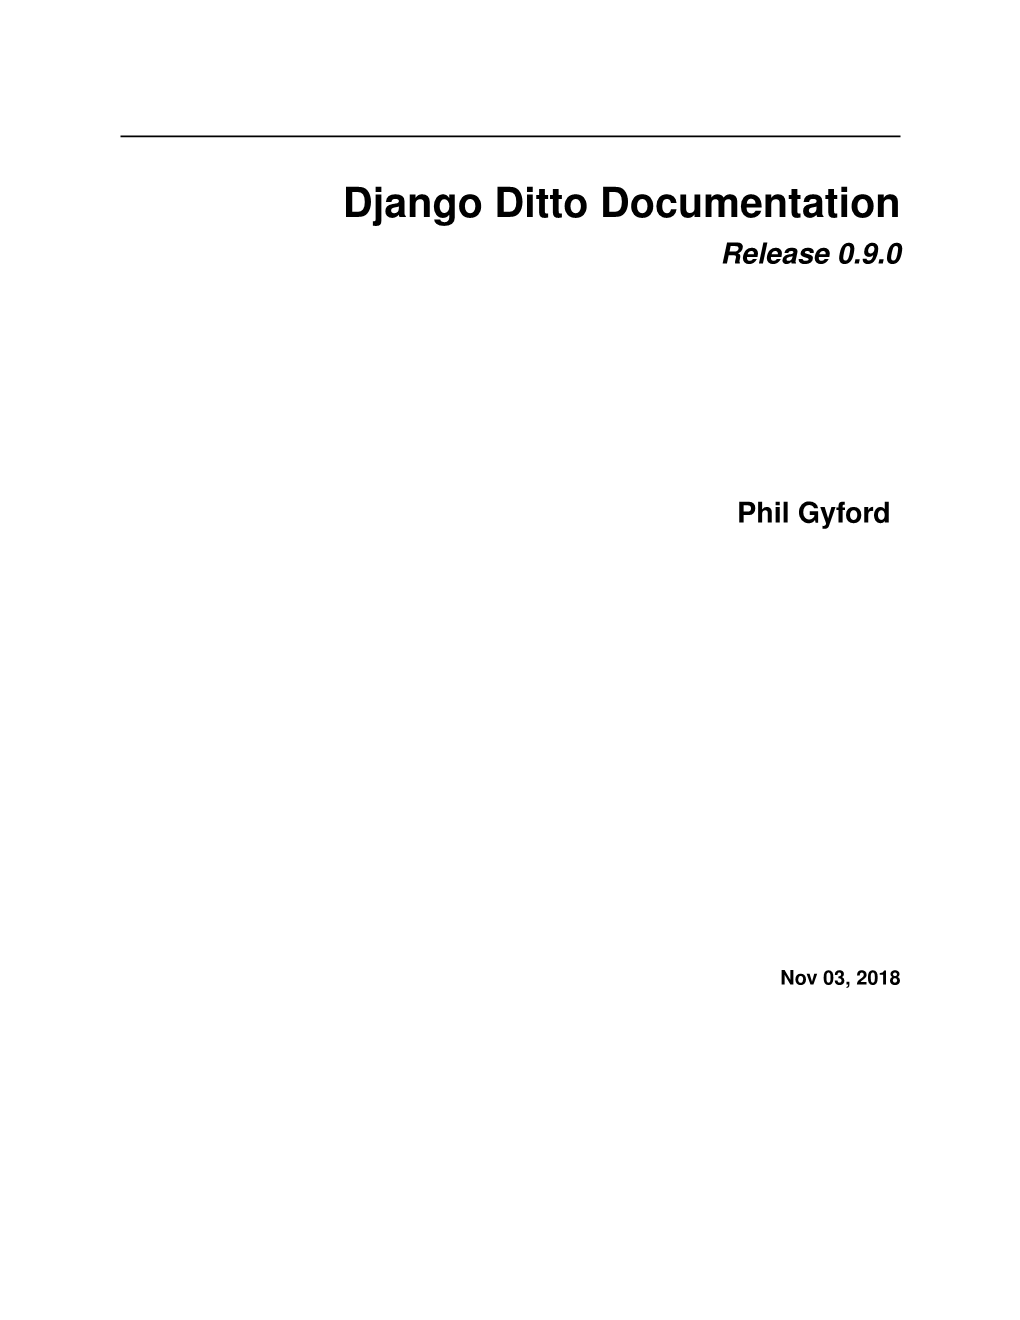 Django Ditto Documentation Release 0.9.0